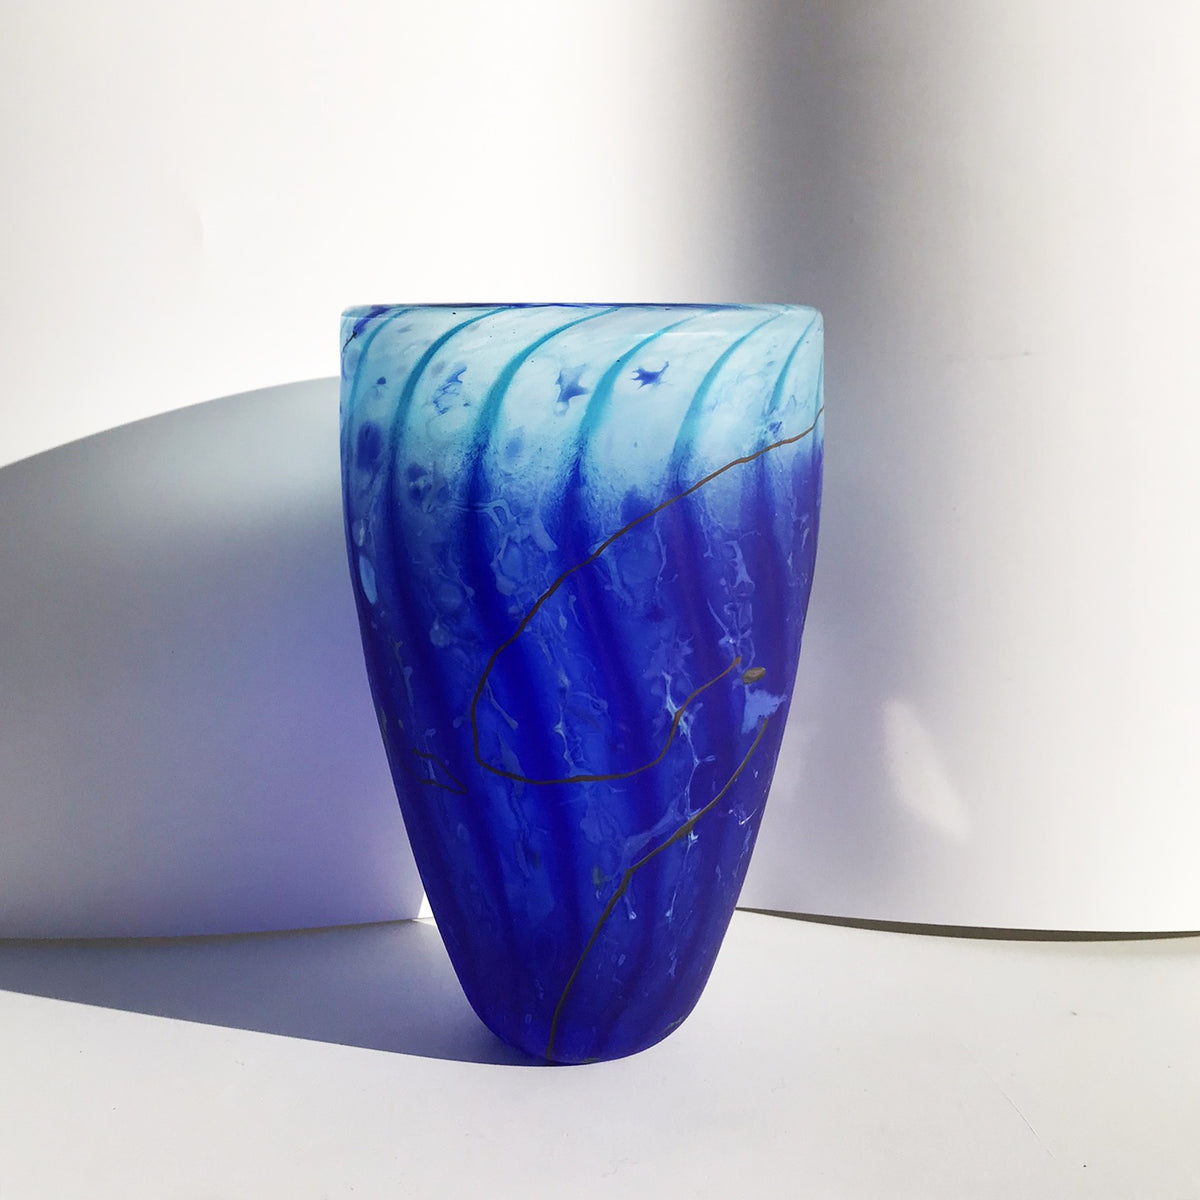 Commotion Vase #2